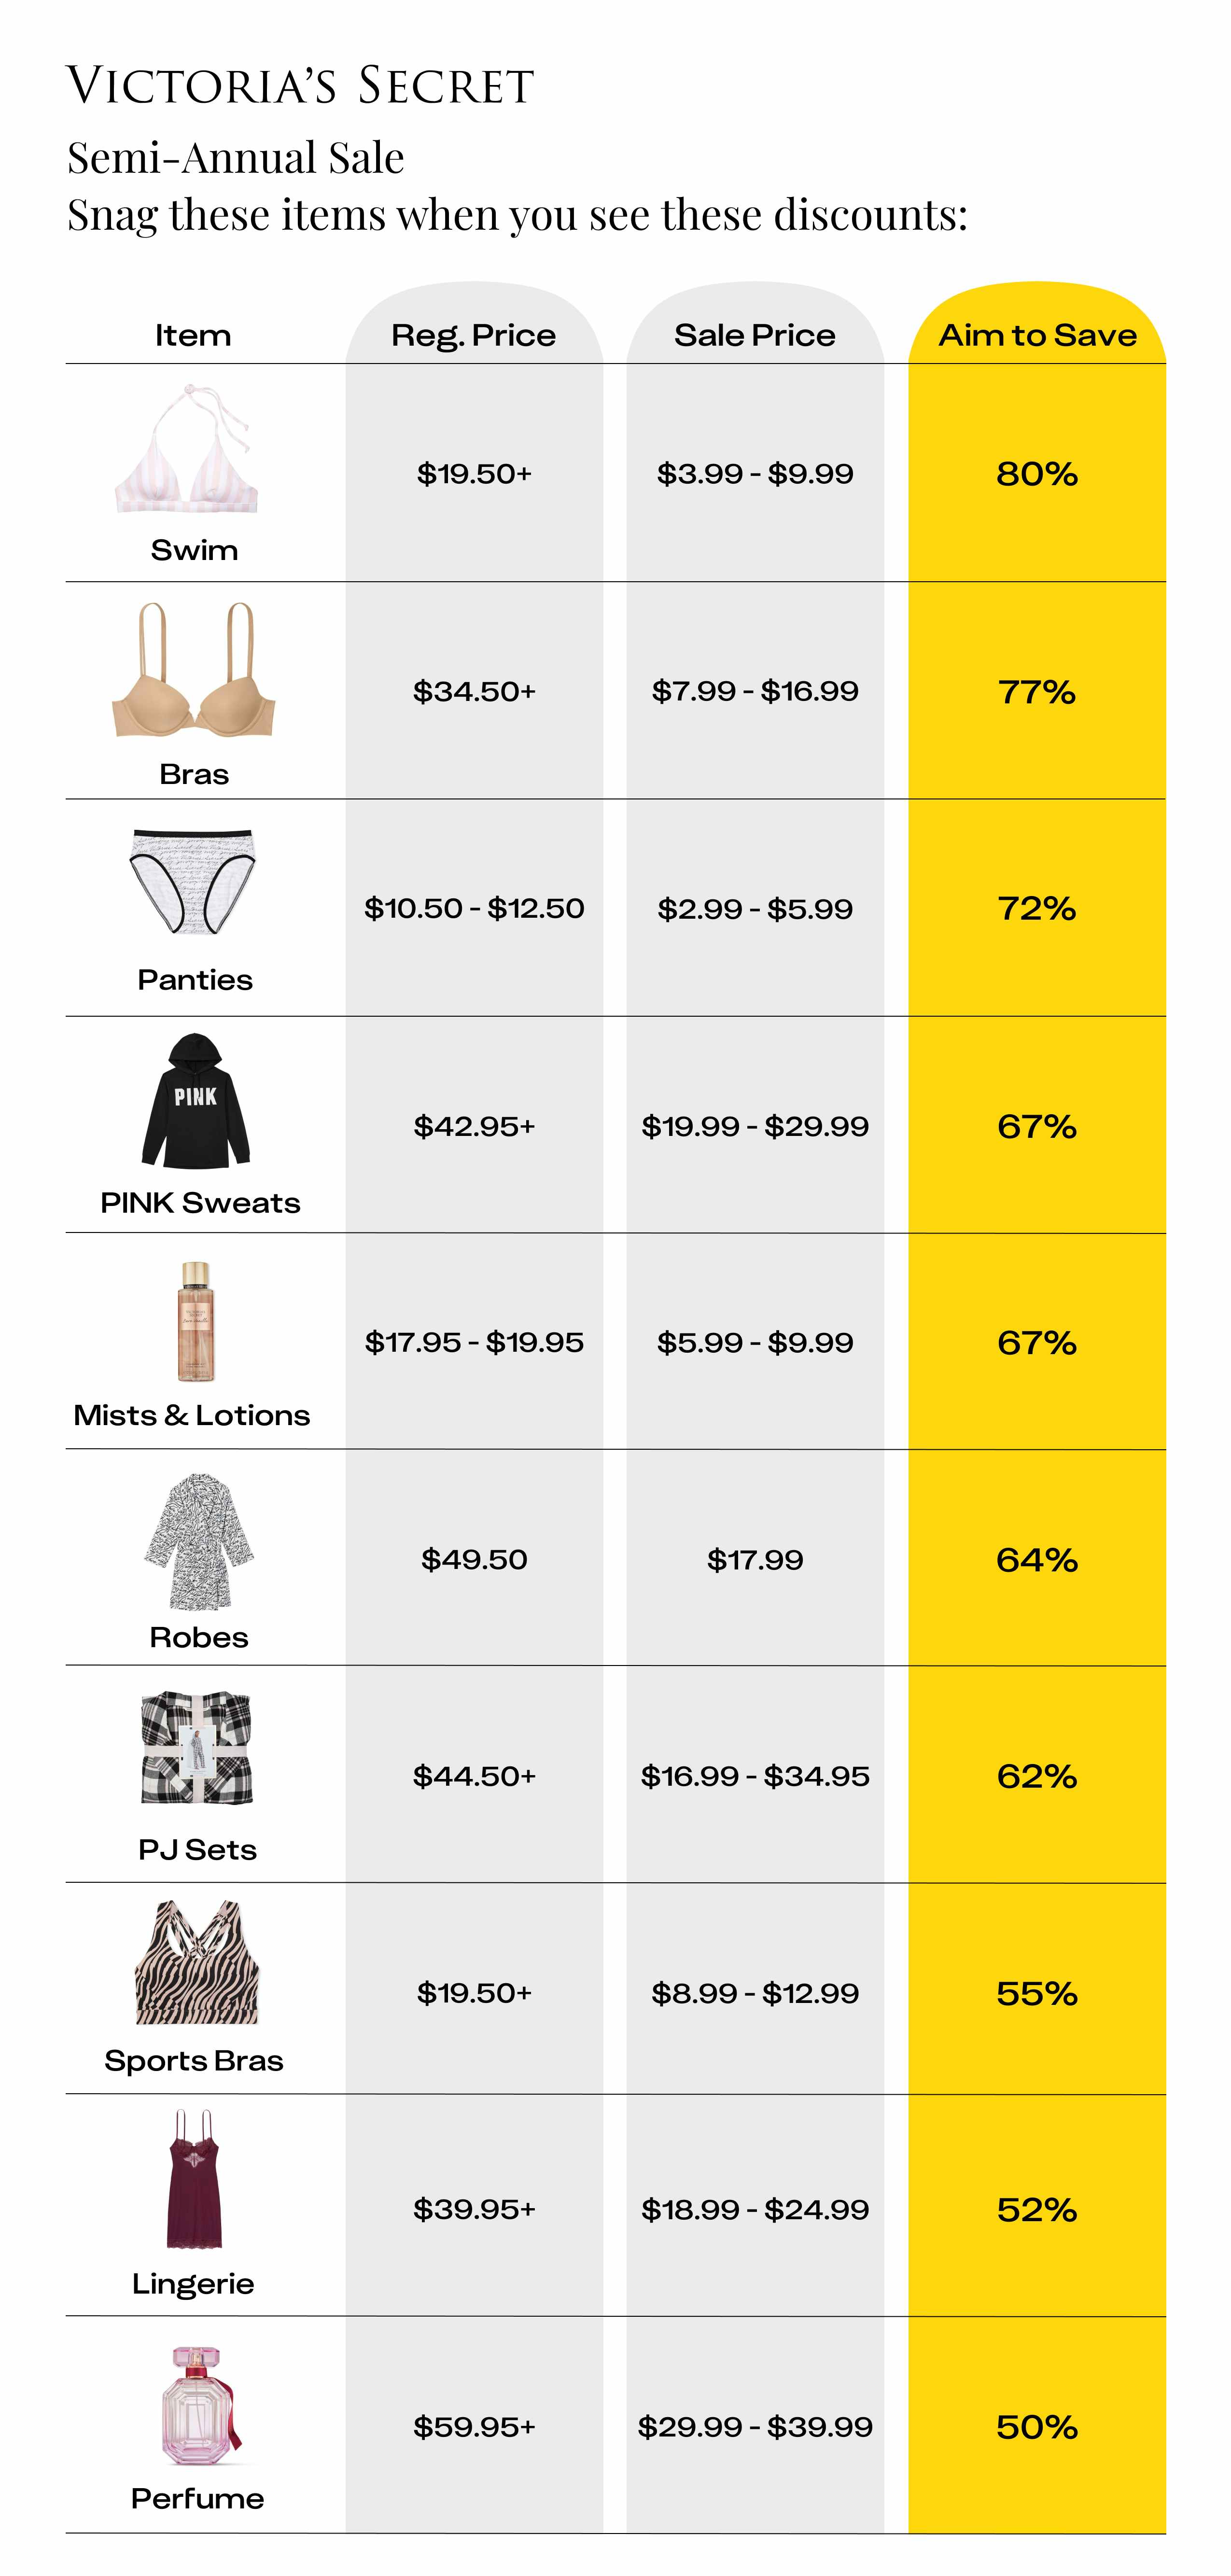 Victoria's Secret Semi-Annual Sale savings goals for each product.